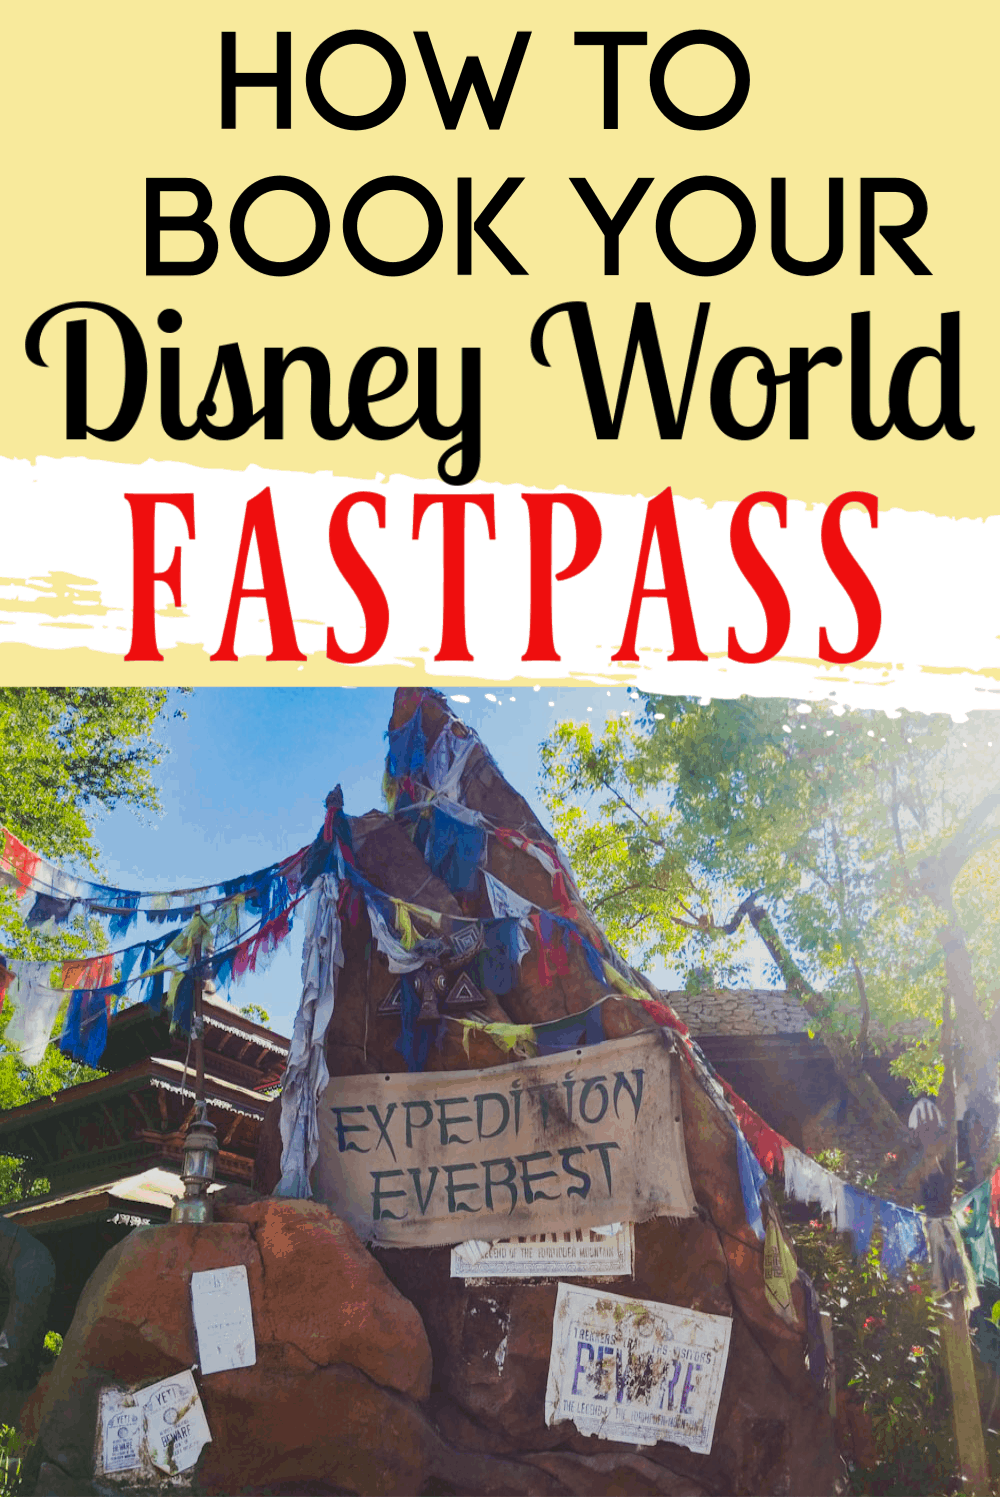 Disney World FastPass Guide & Tips The Disney Journey